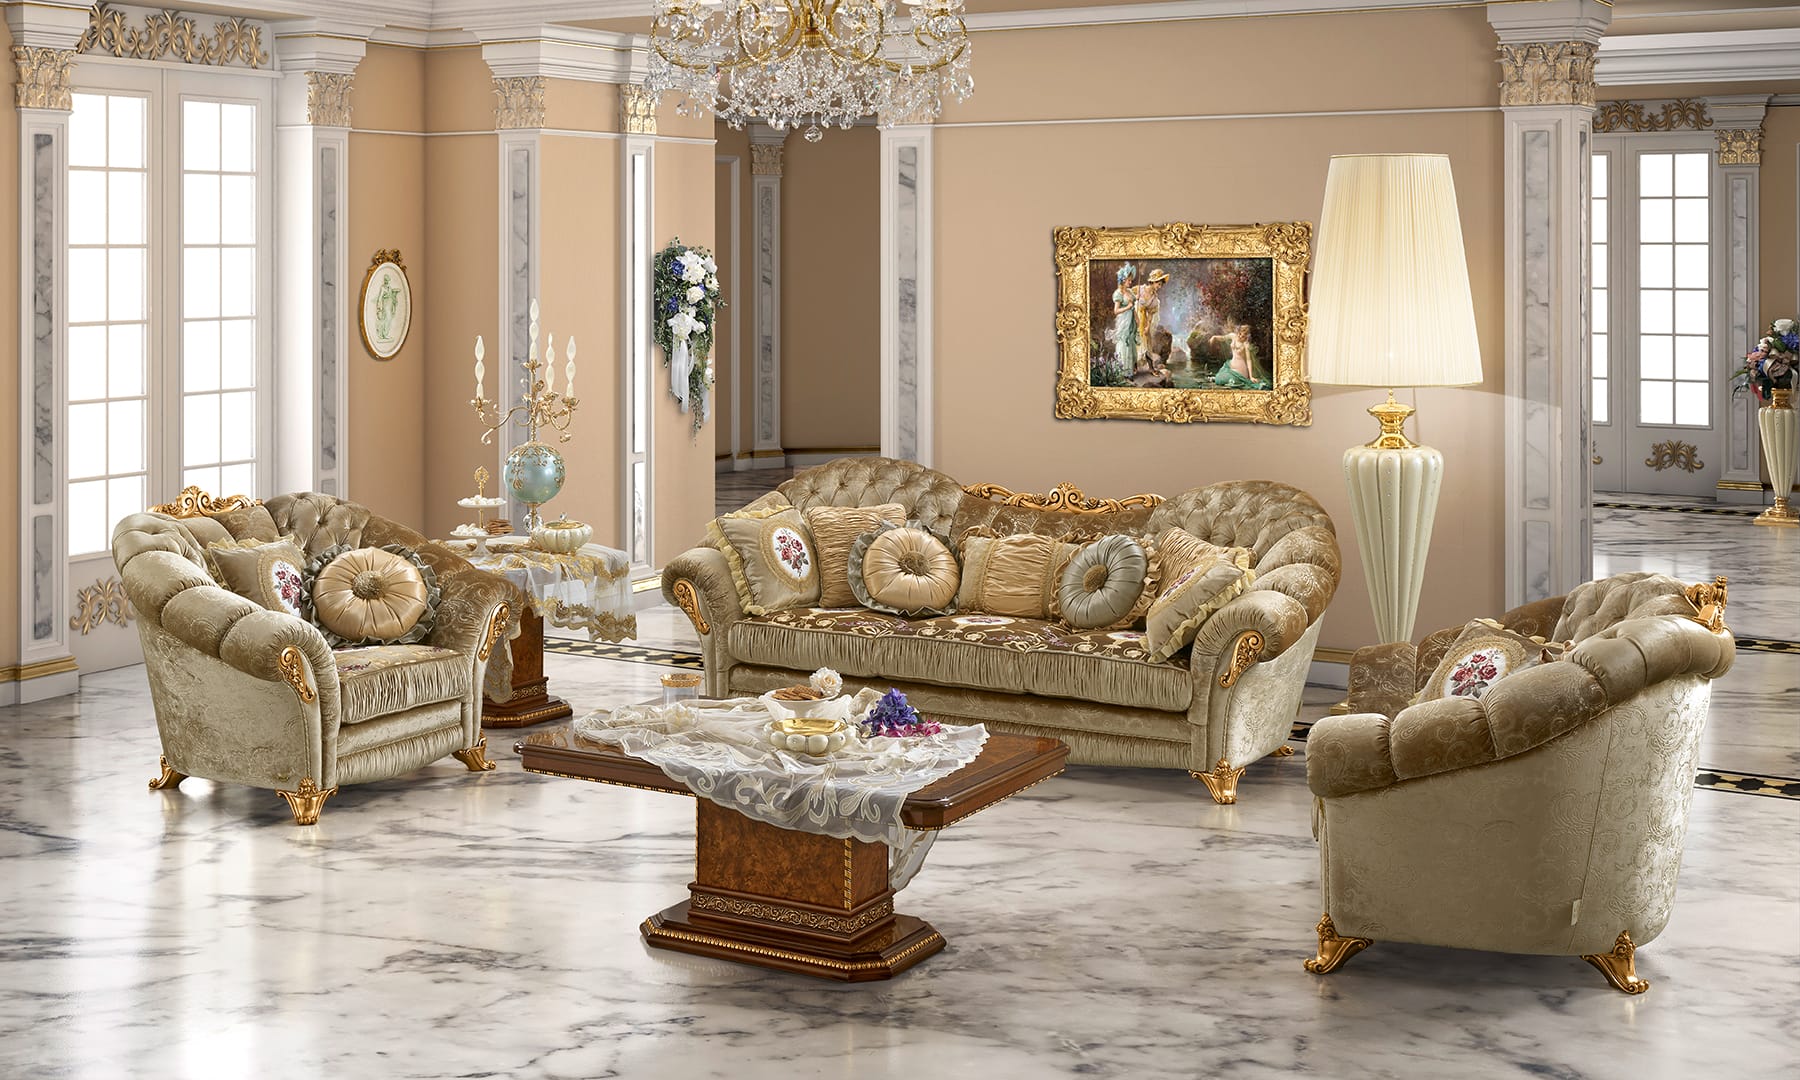 Classic Luxury Hand Carving Sofa Set Design By Royalzig Luxury Furniture